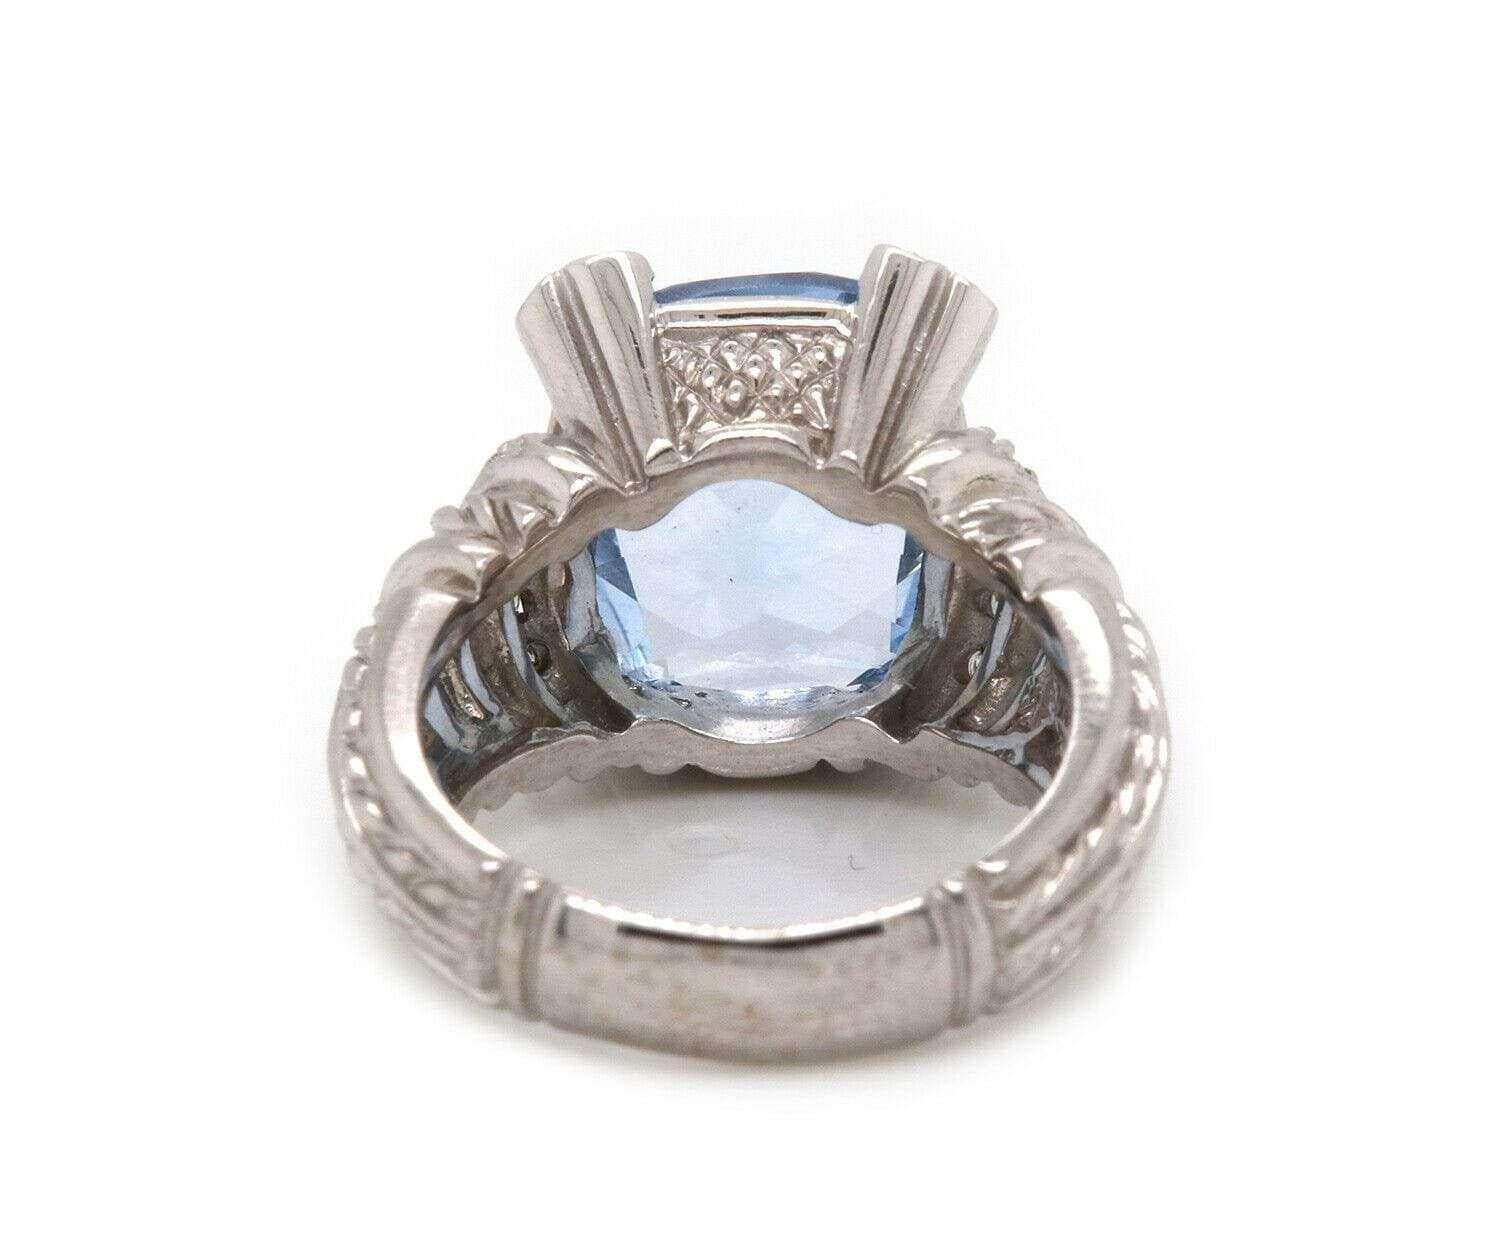 Judith Ripka Blue CZ & 0.45 CTW Diamond Ring in 18K

Judith Ripka CZ & Diamond Ring
18K White Gold
Diamond Weight: Approx. 0.45 CTW
Blue CZ Size: Approx. 11 X 13.5 MM
Ring Size: 5.75 (US)
Weight: Approx. 12.3 Grams
Stamped: Ripka,